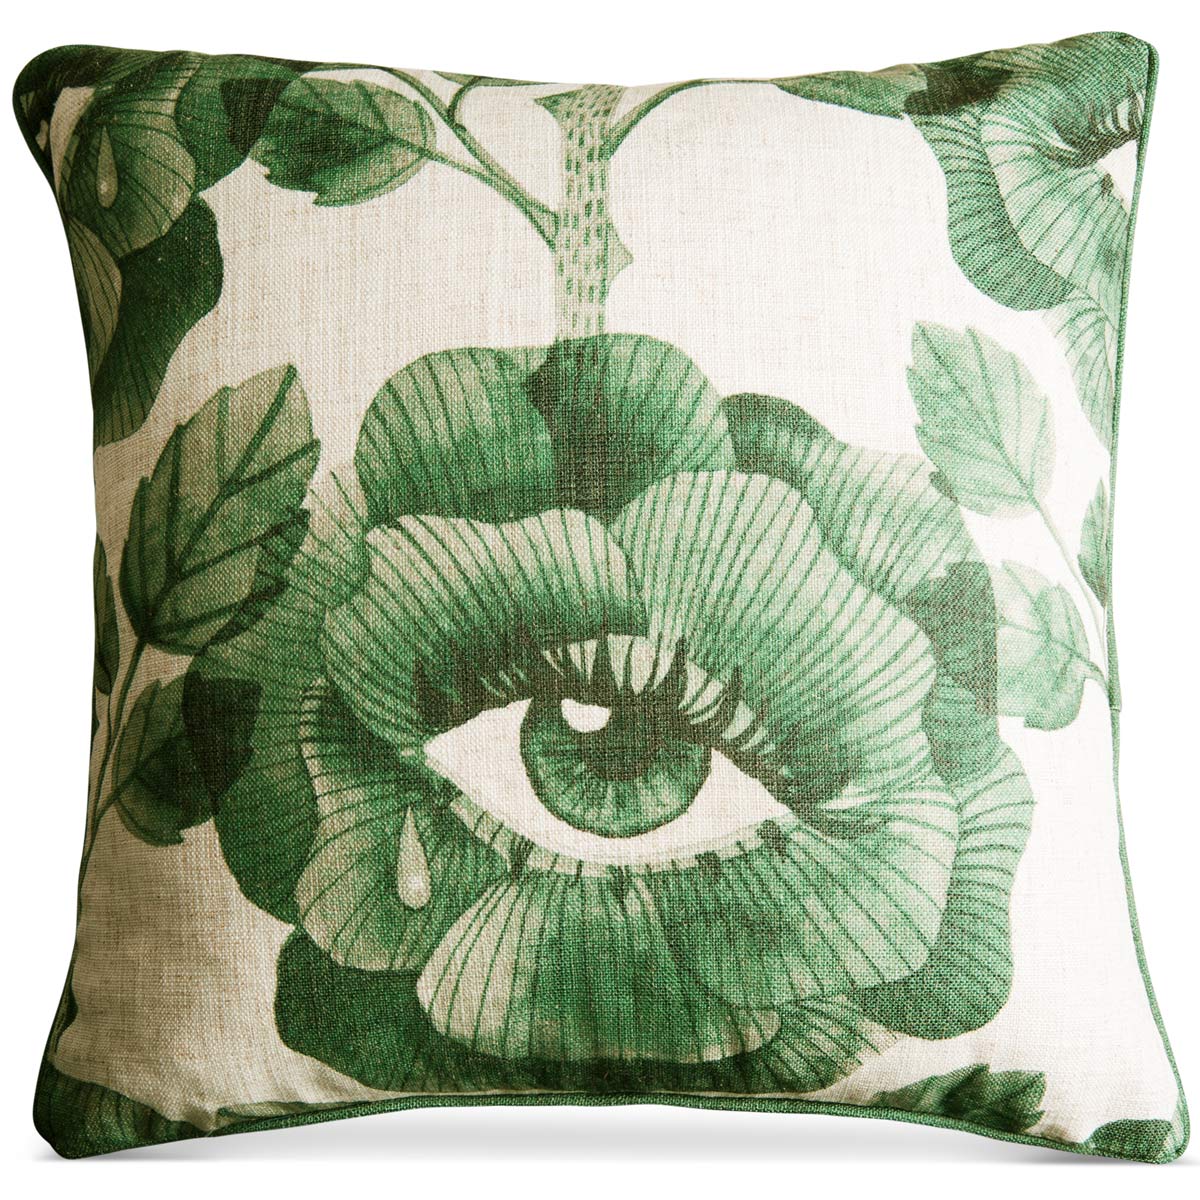 Floral Eyes Pillow in Hunter Green - ModShop1.com